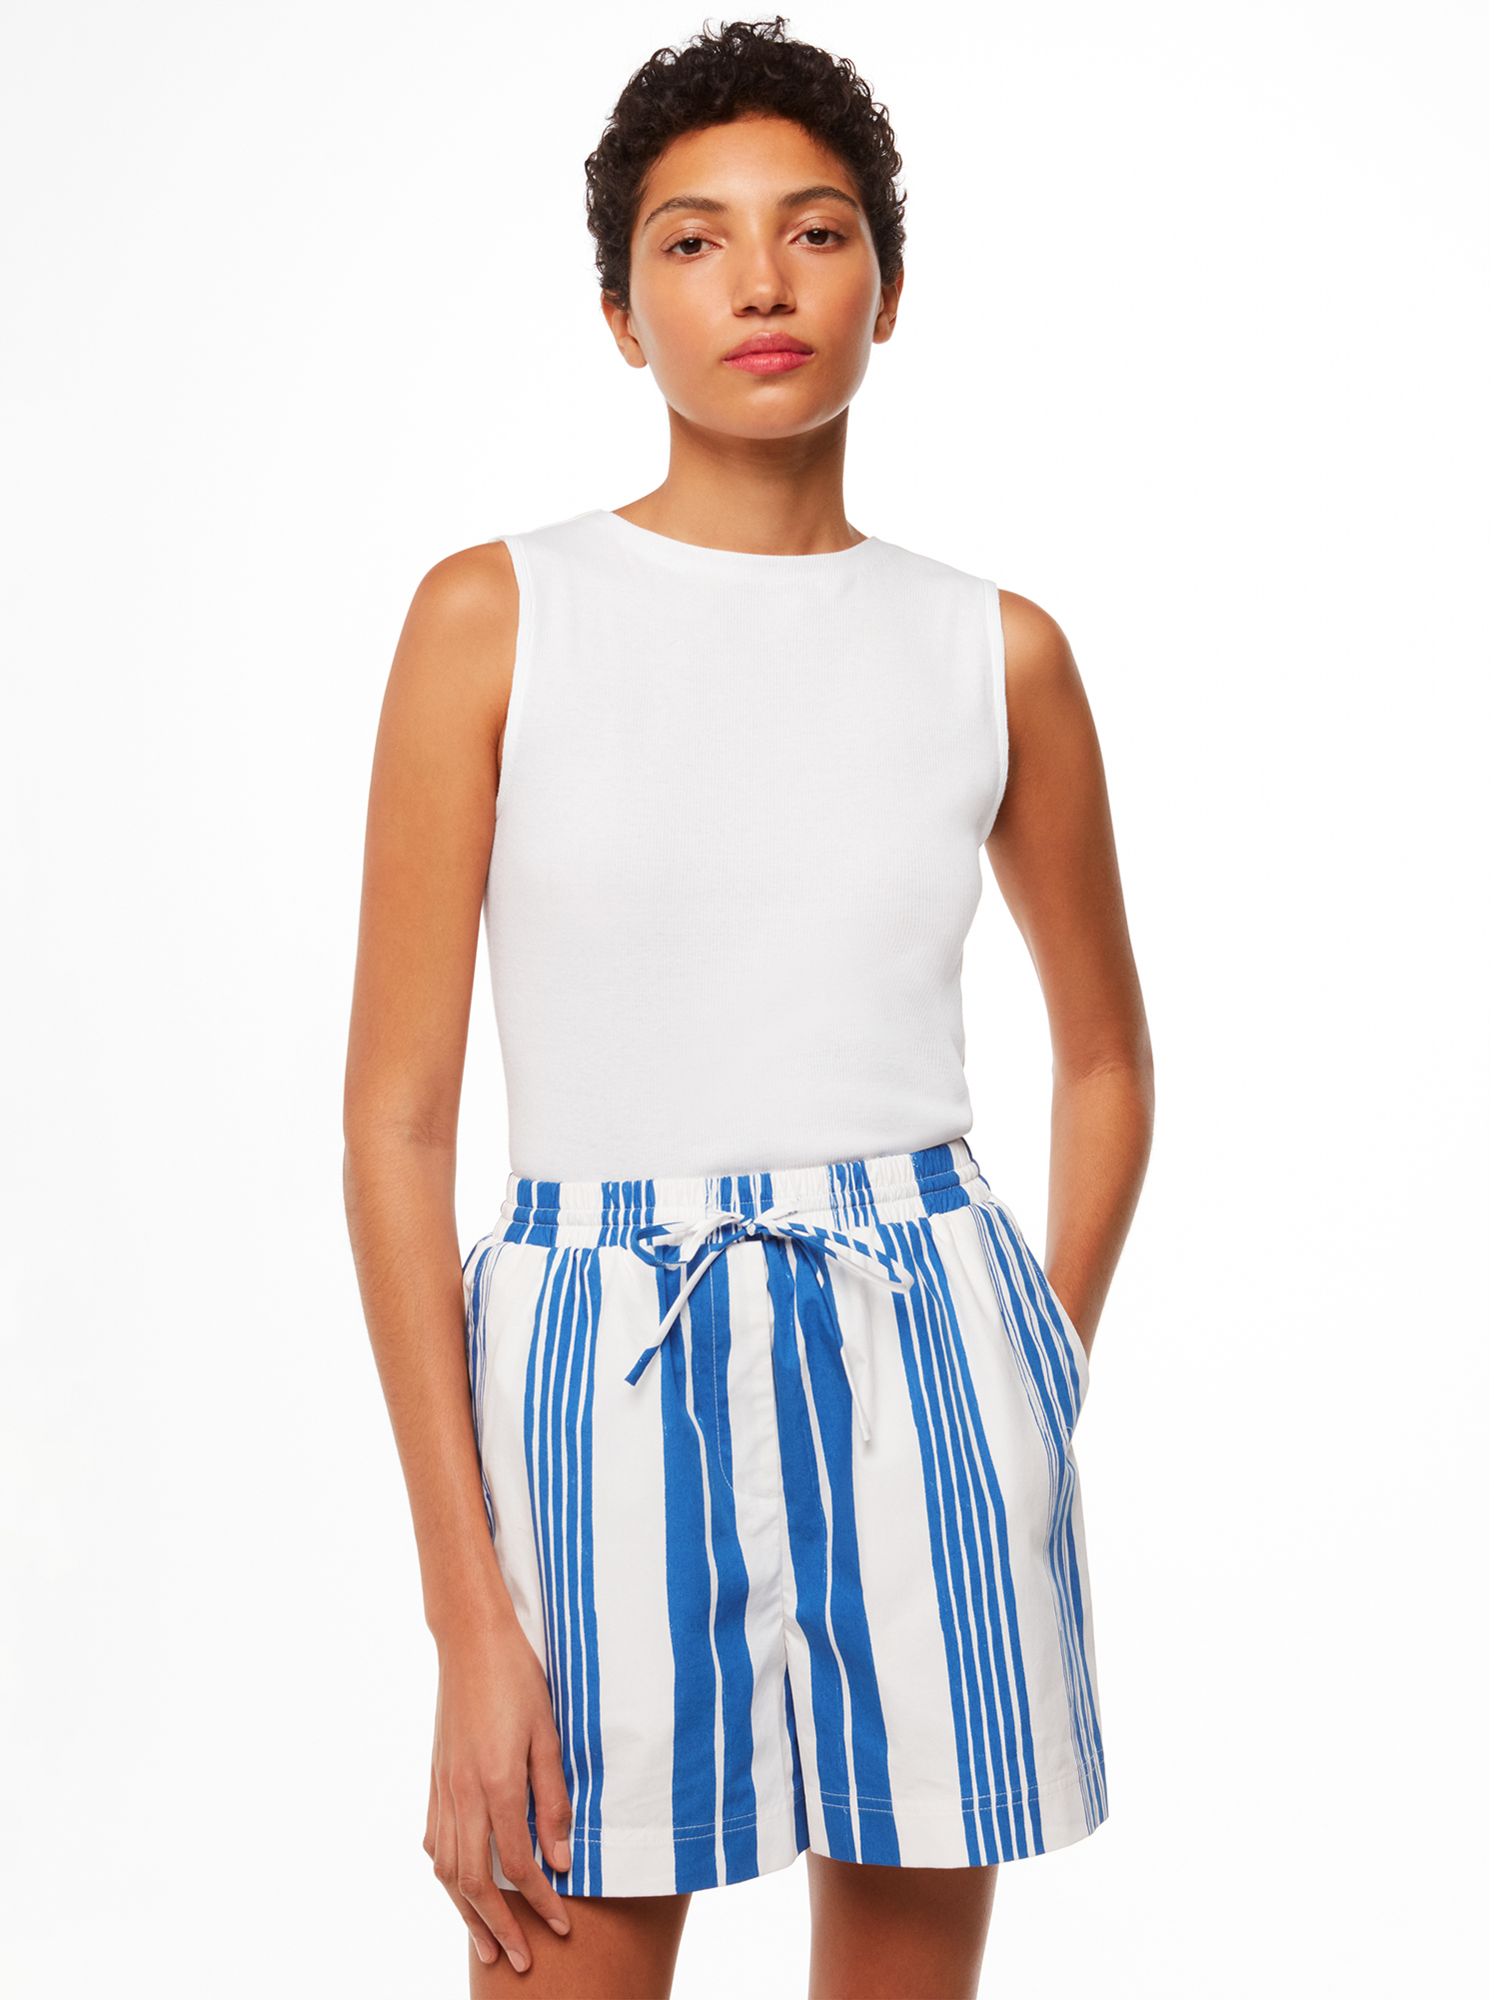 Whistles Painted Stripe Cotton Shorts, White/Blue, 6